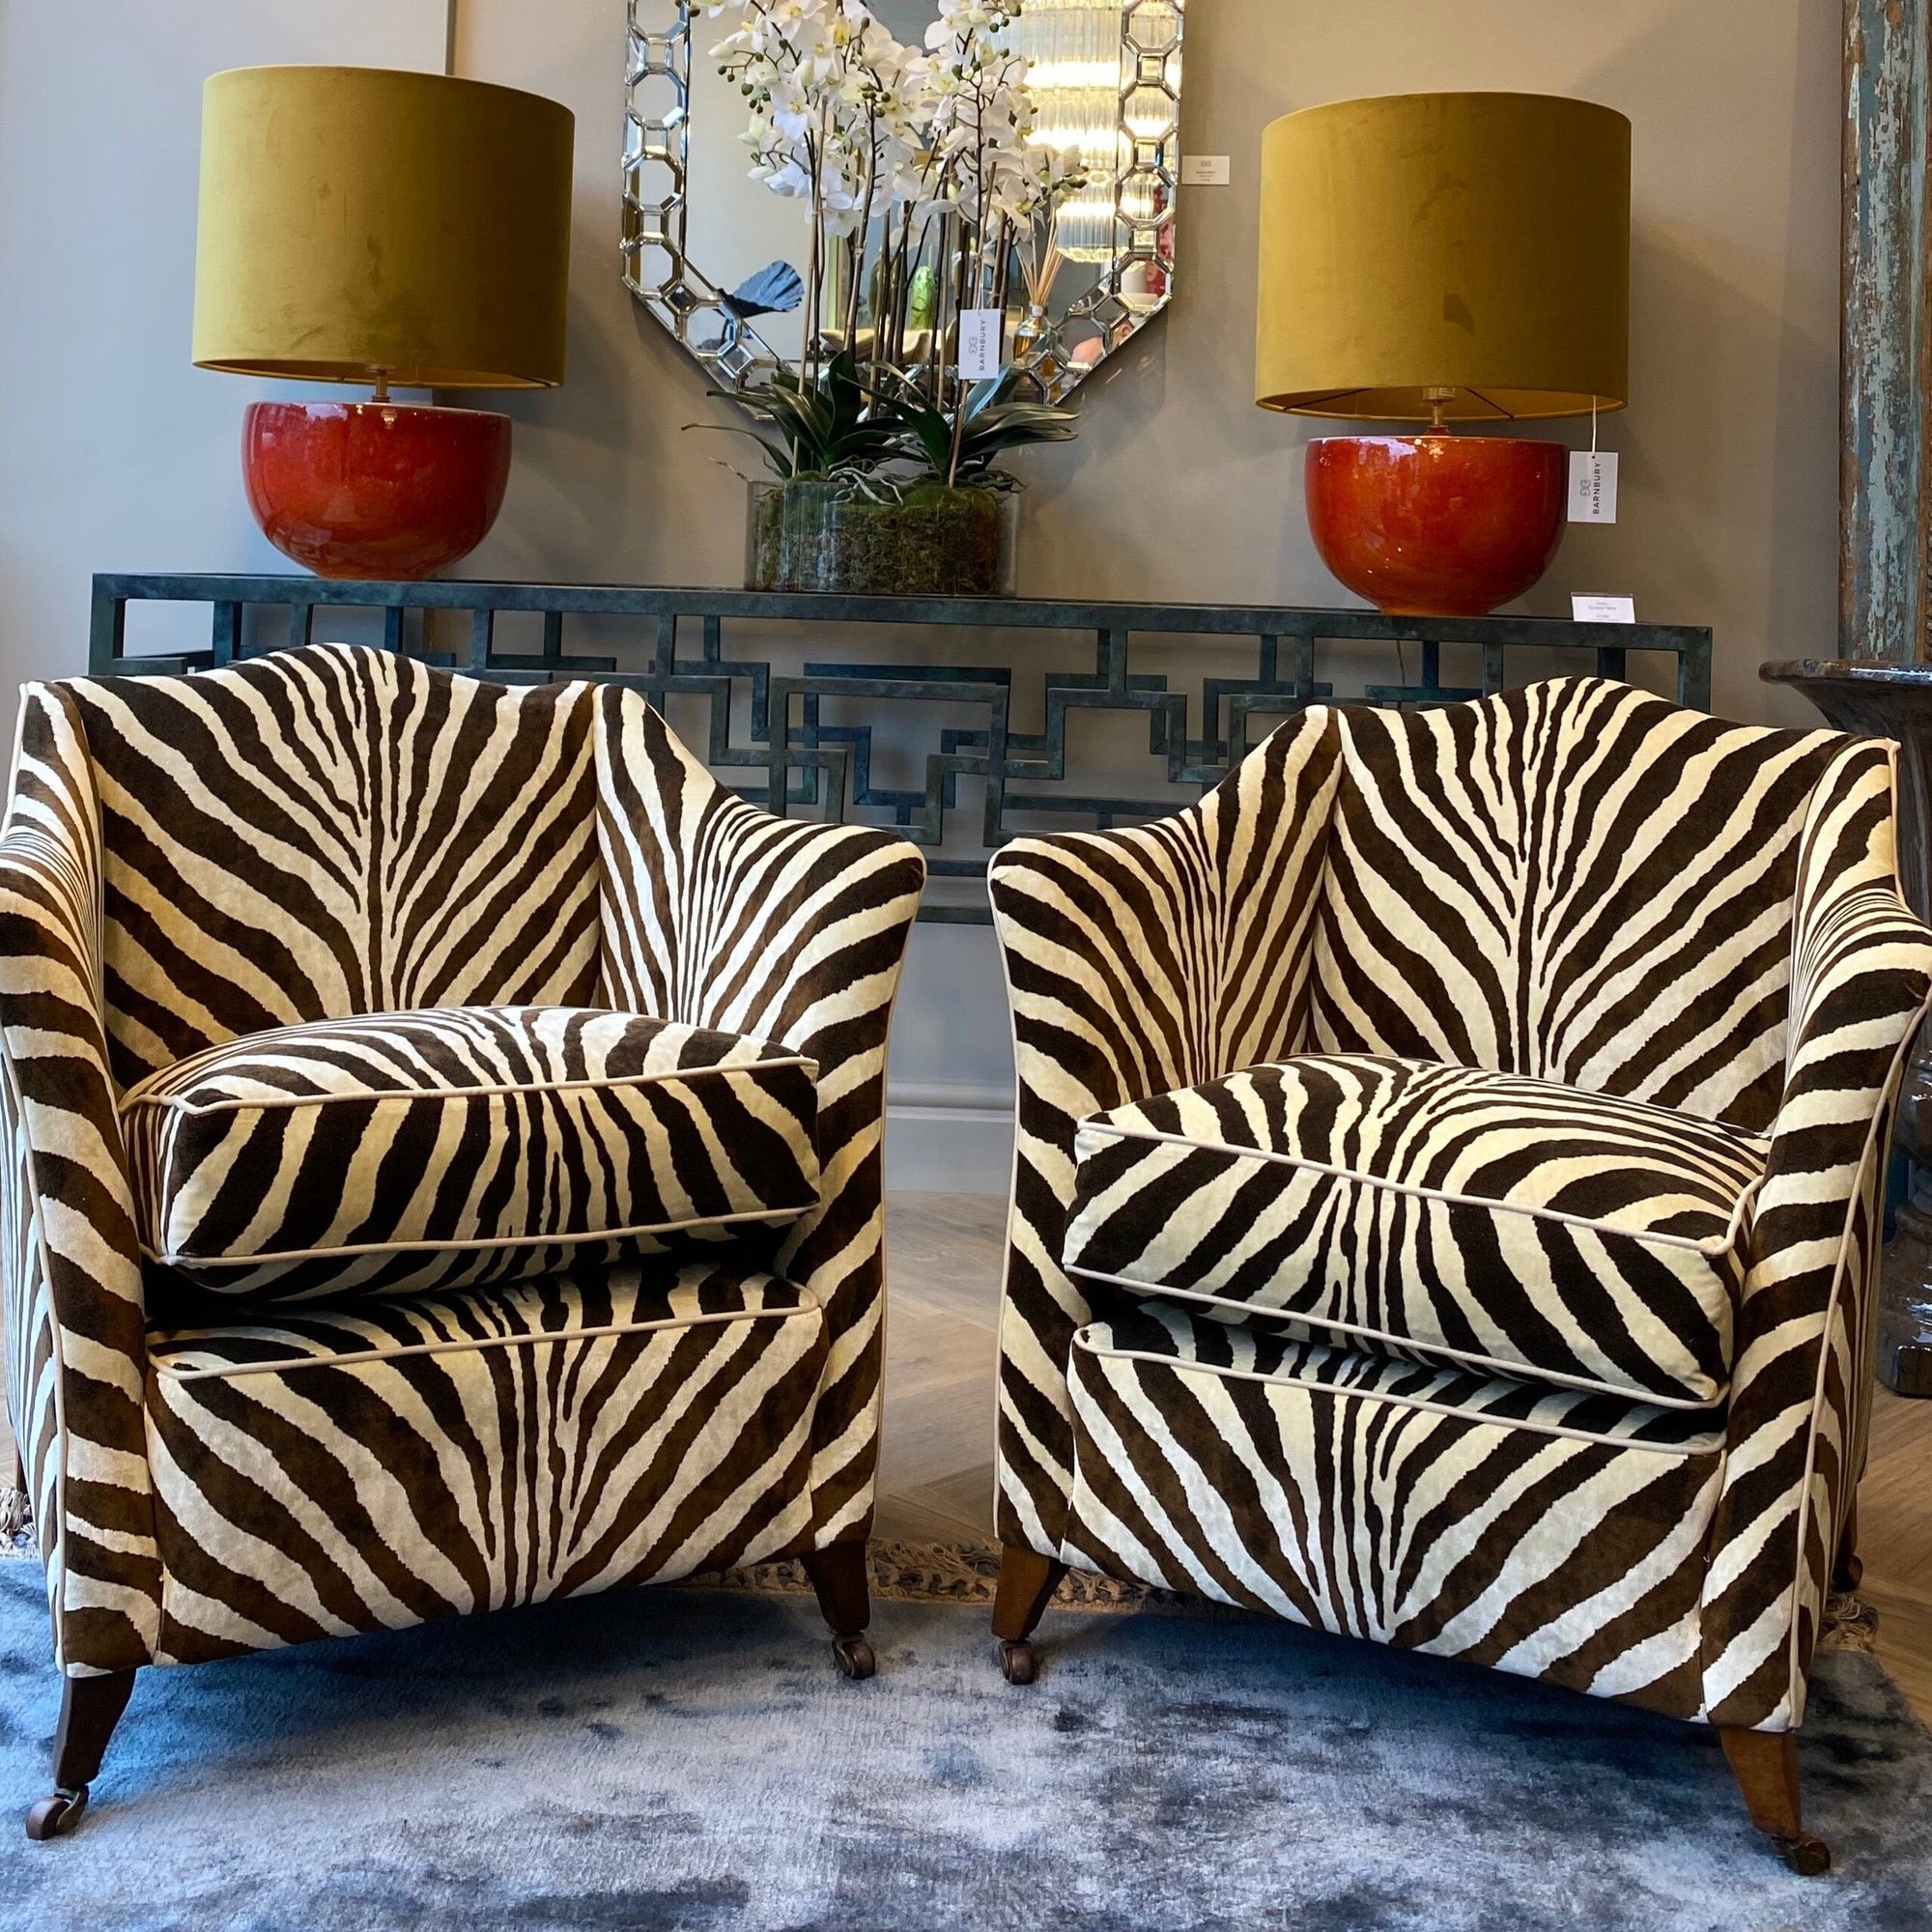 Pair of Edwardian Chairs in Ralph Lauren - Barnbury